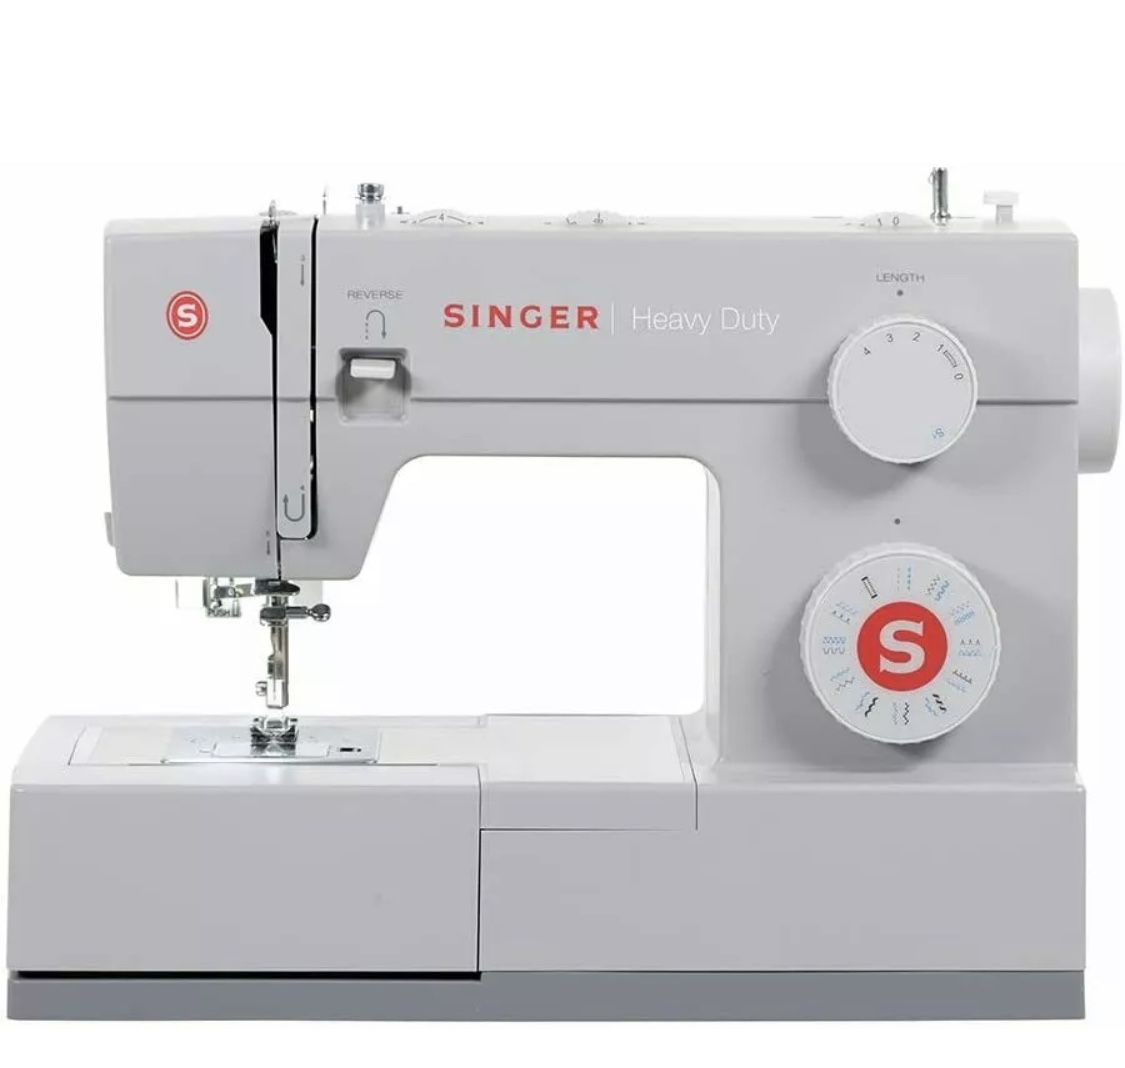 Singer Sewing Machine HD 725 Heavy Duty w/ 23 Built-in Stitches 4423